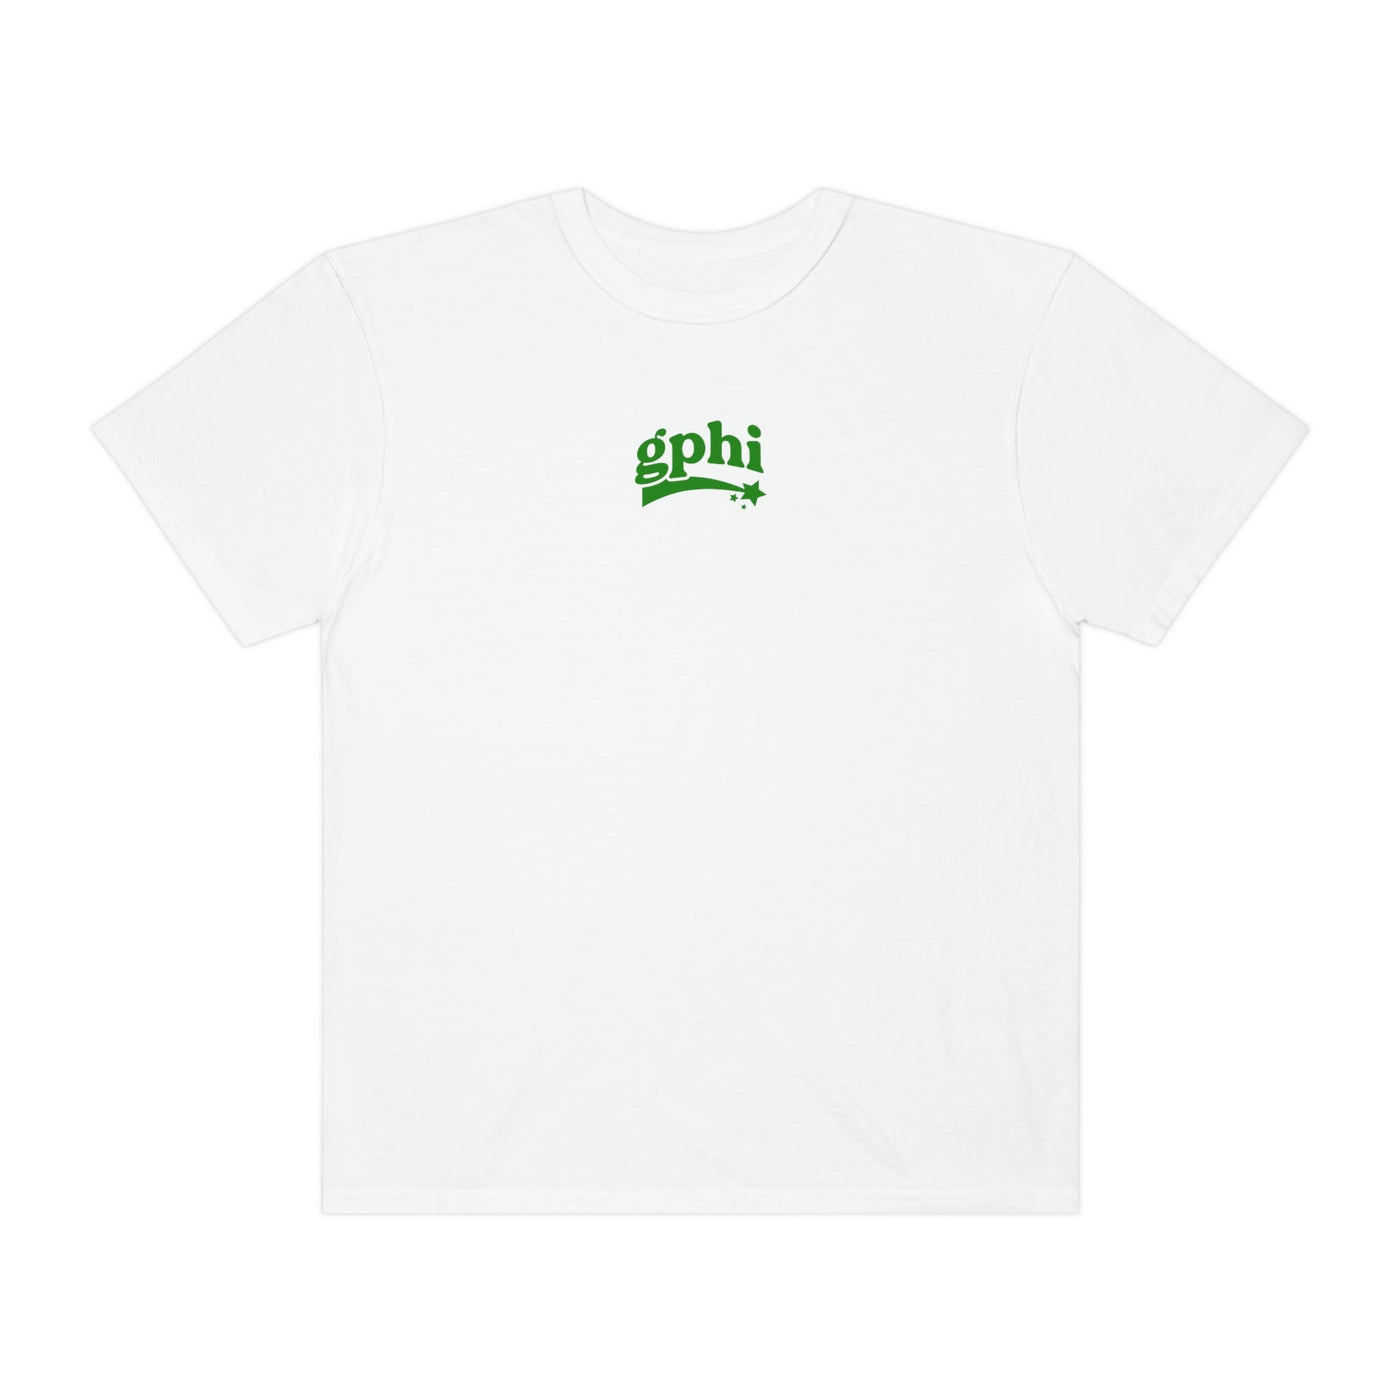 Gamma Phi Beta Planet T-shirt | Be Kind to the Planet Trendy Sorority shirt